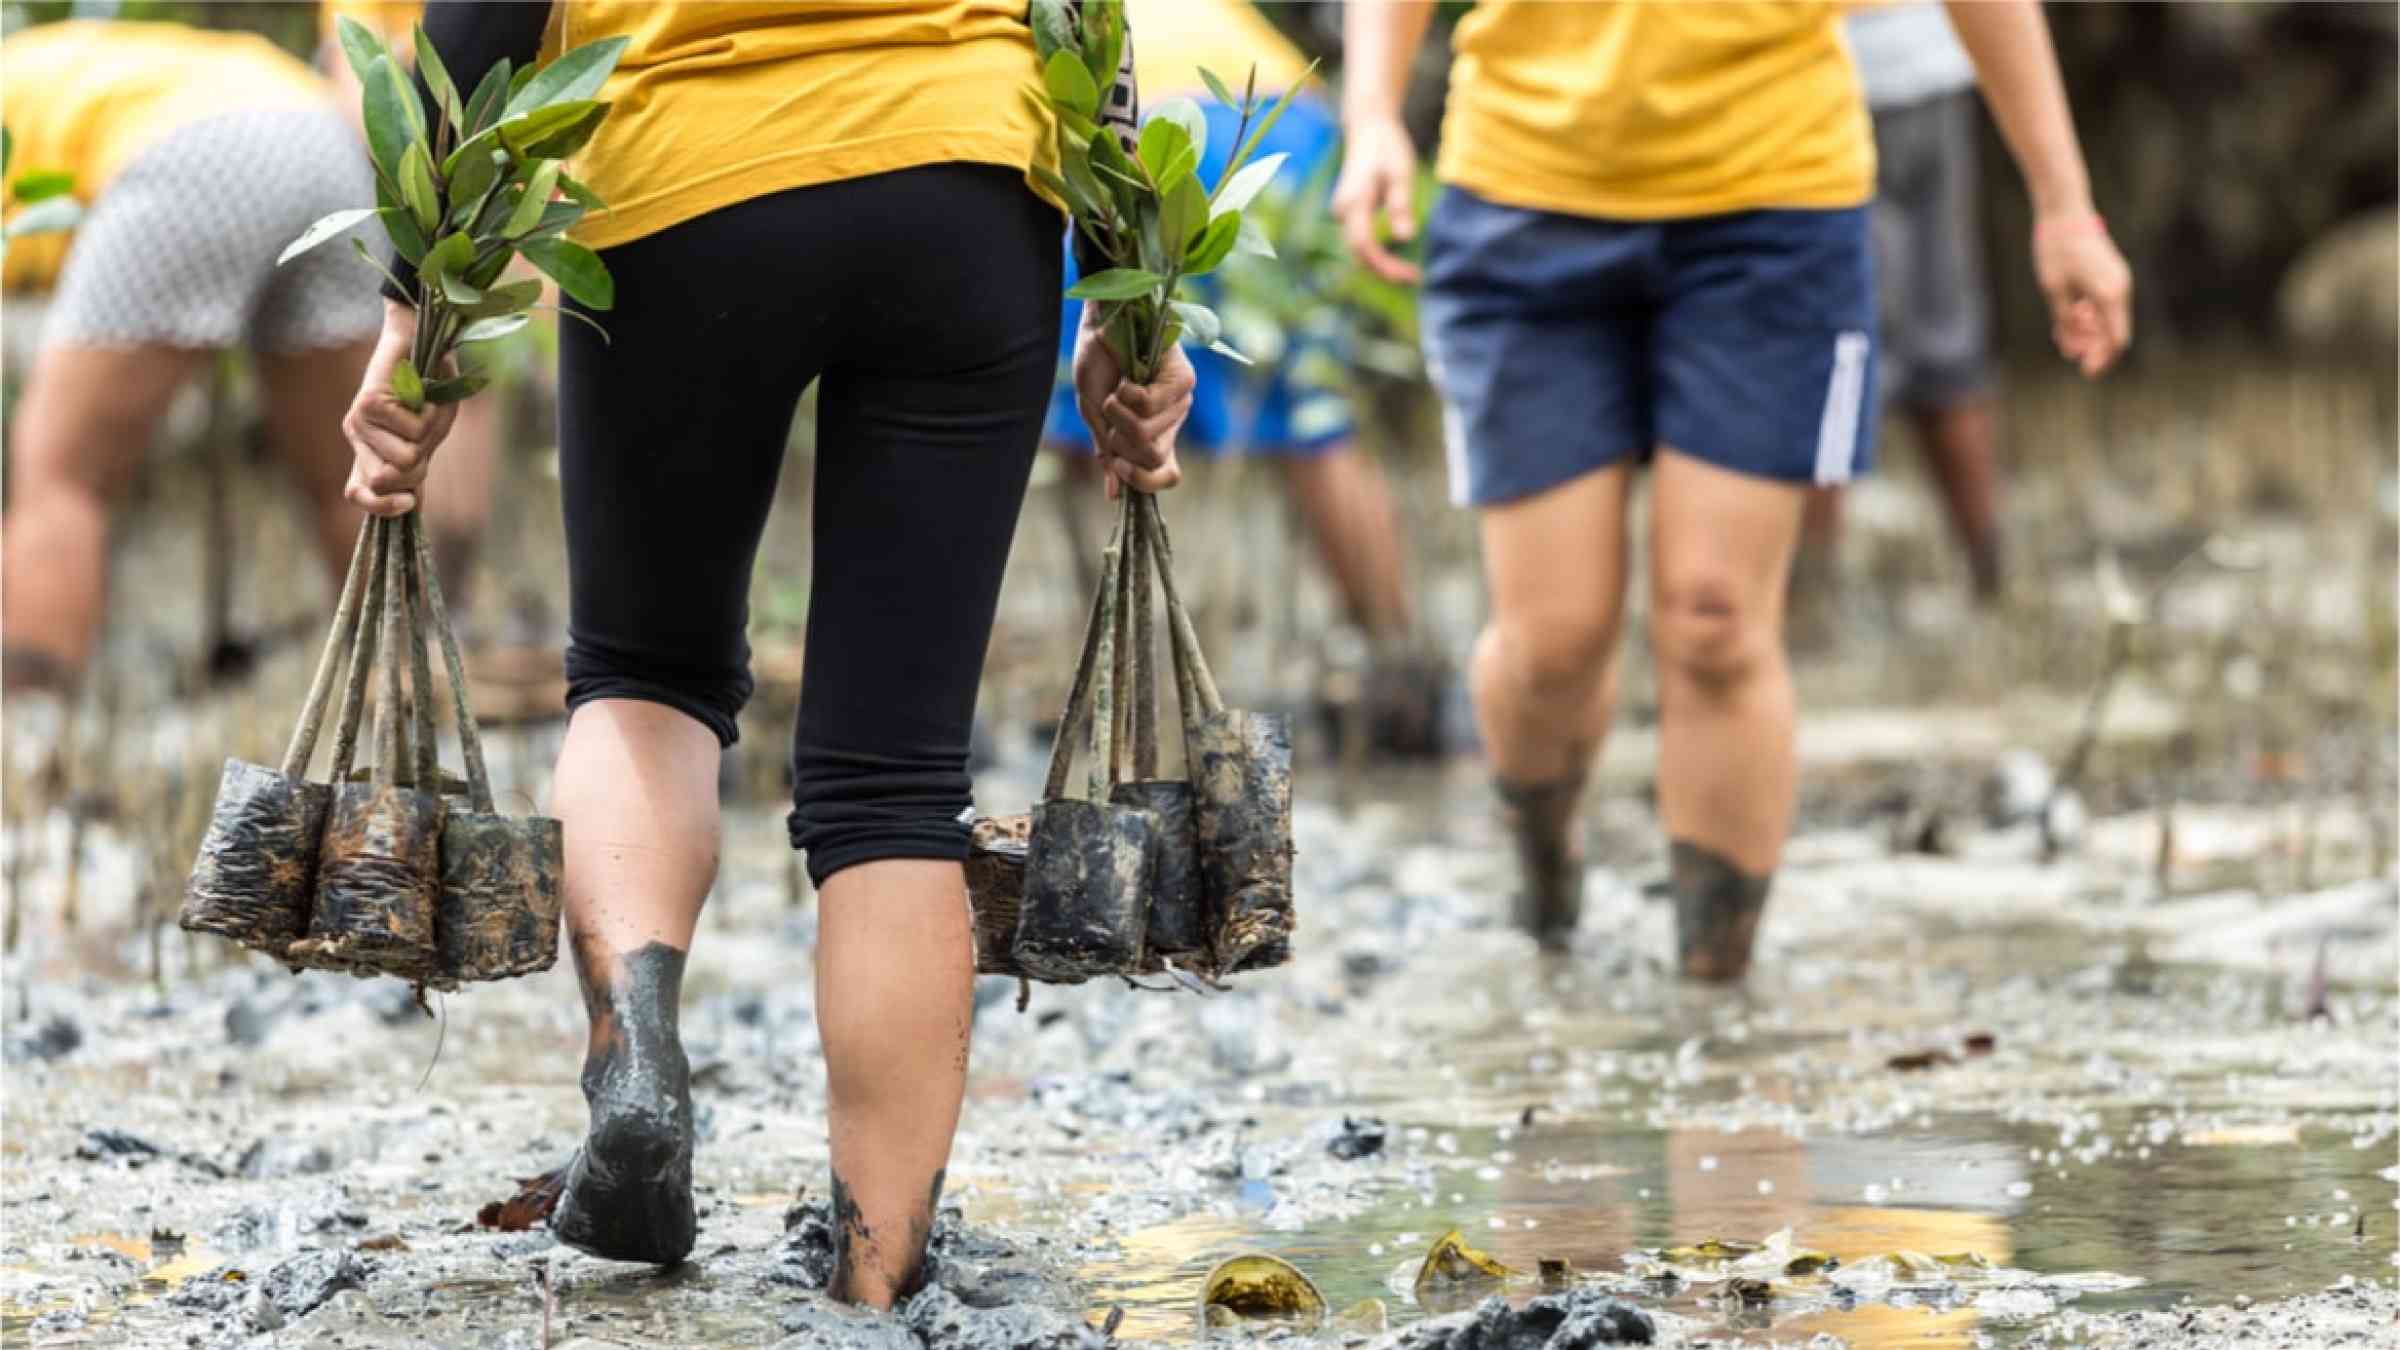 People planting mangroves in the mud.